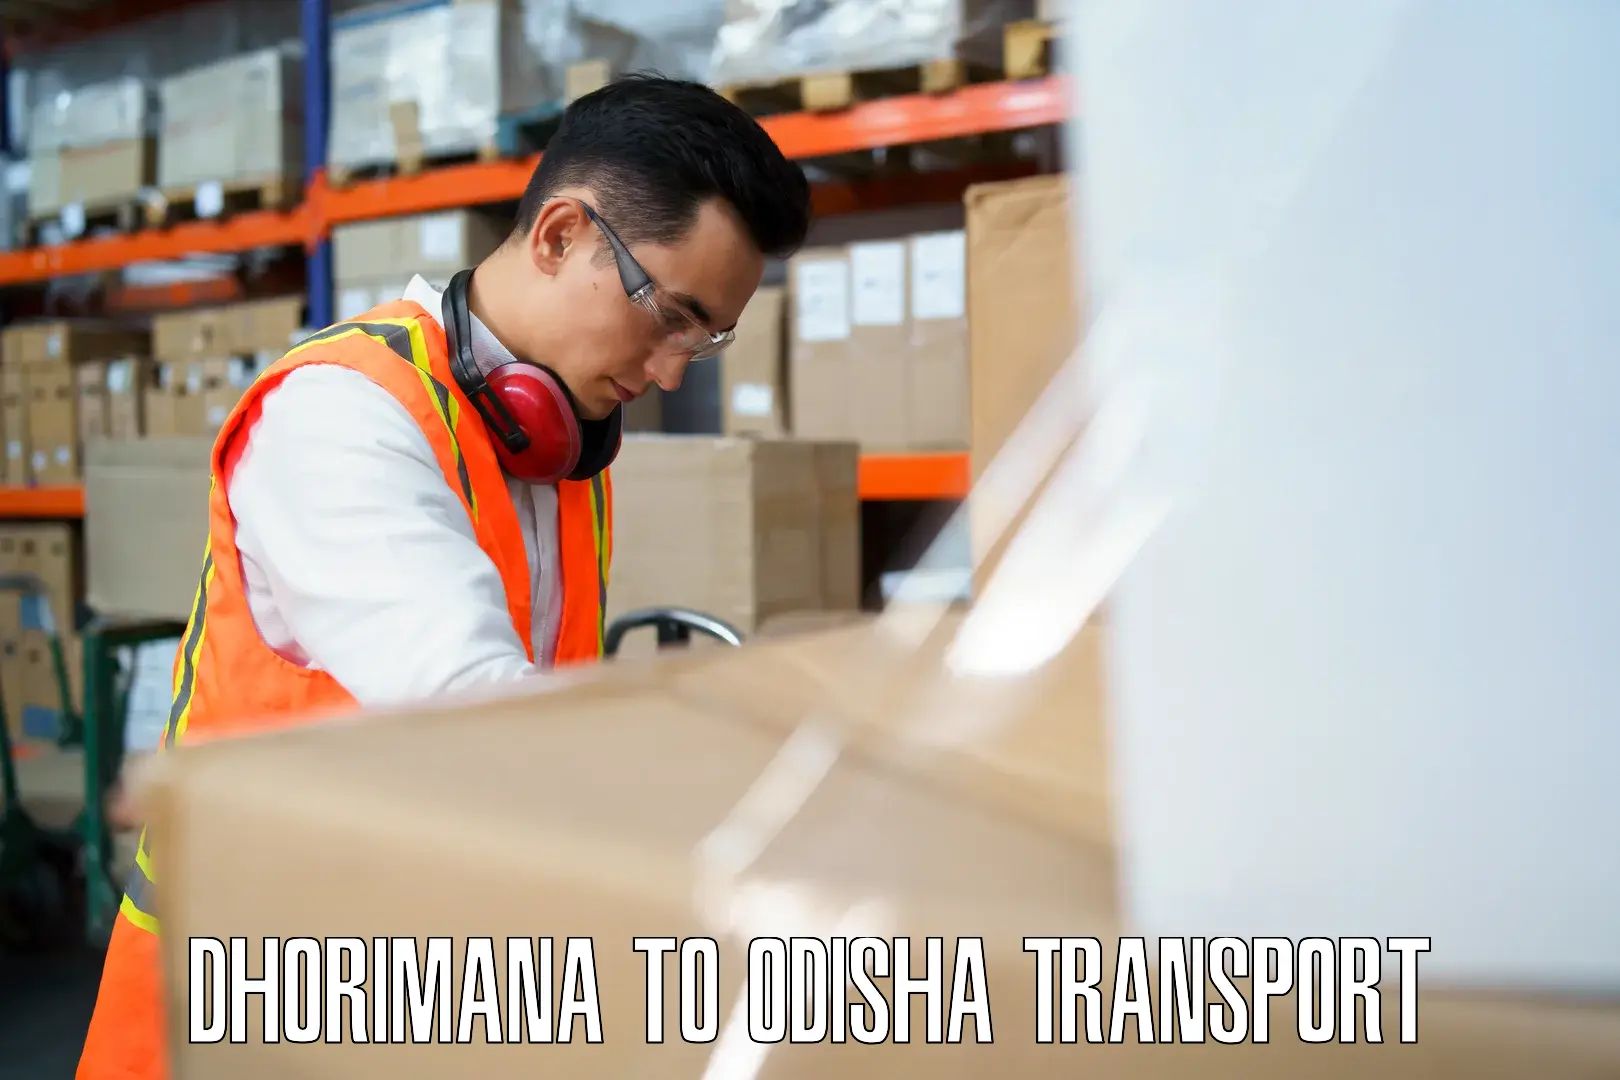 Transport in sharing Dhorimana to Kosagumuda